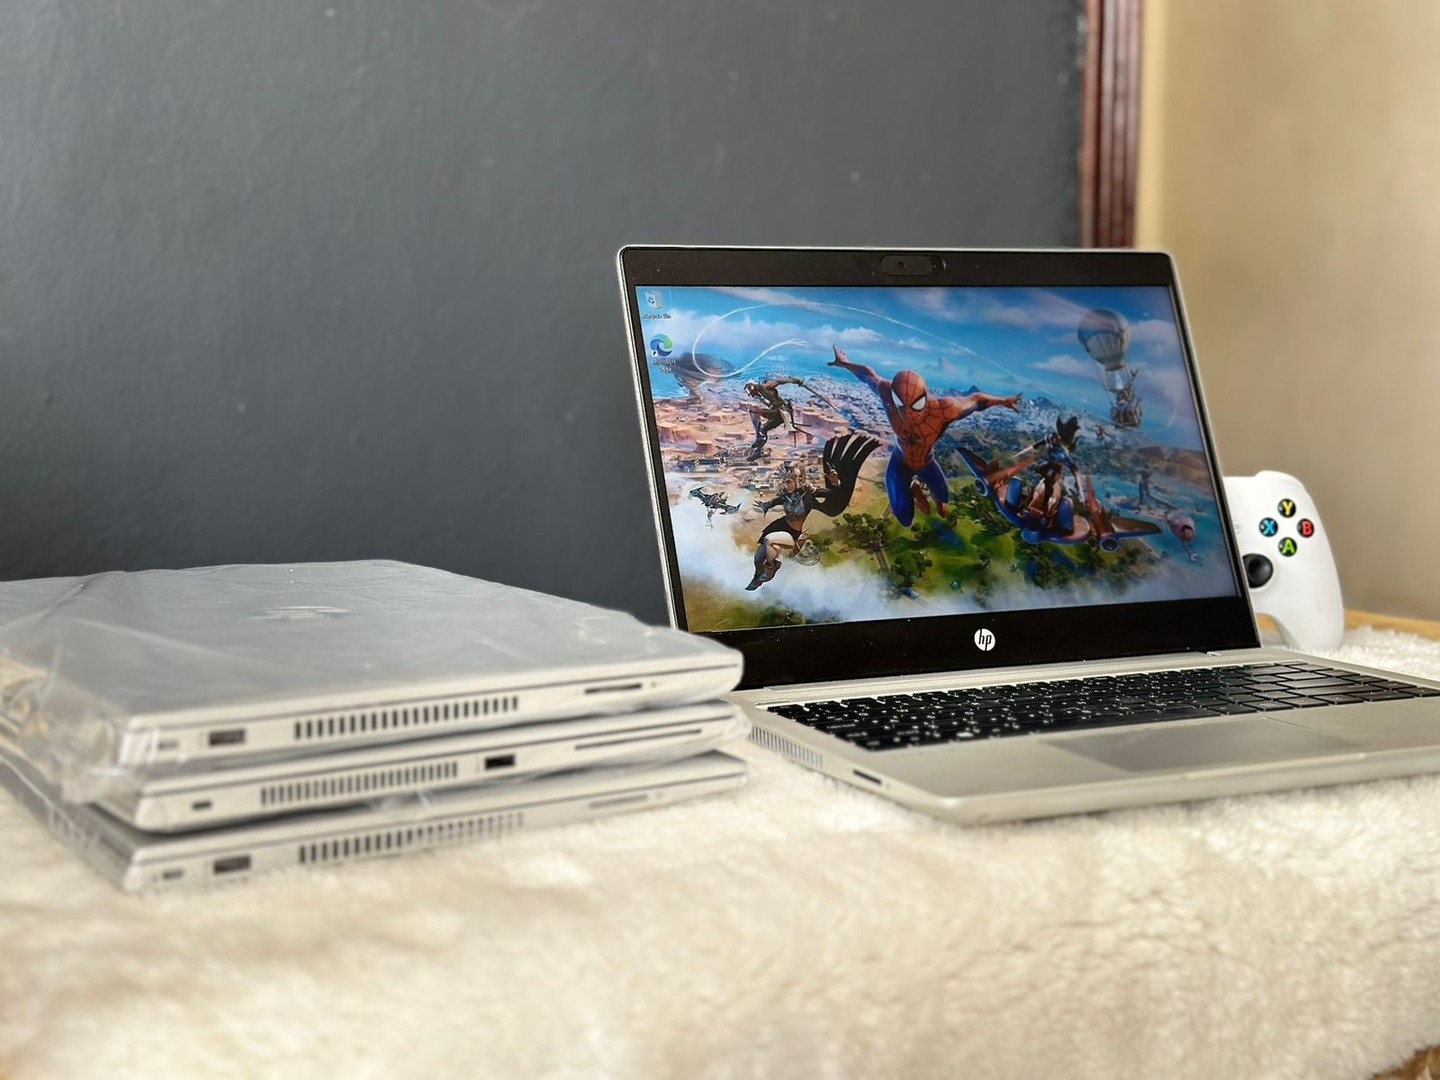 computadoras y laptops - Laptop Hp Probook G7, RYZEN 5, i5 10ma, 8gb Ram, 256 SSD